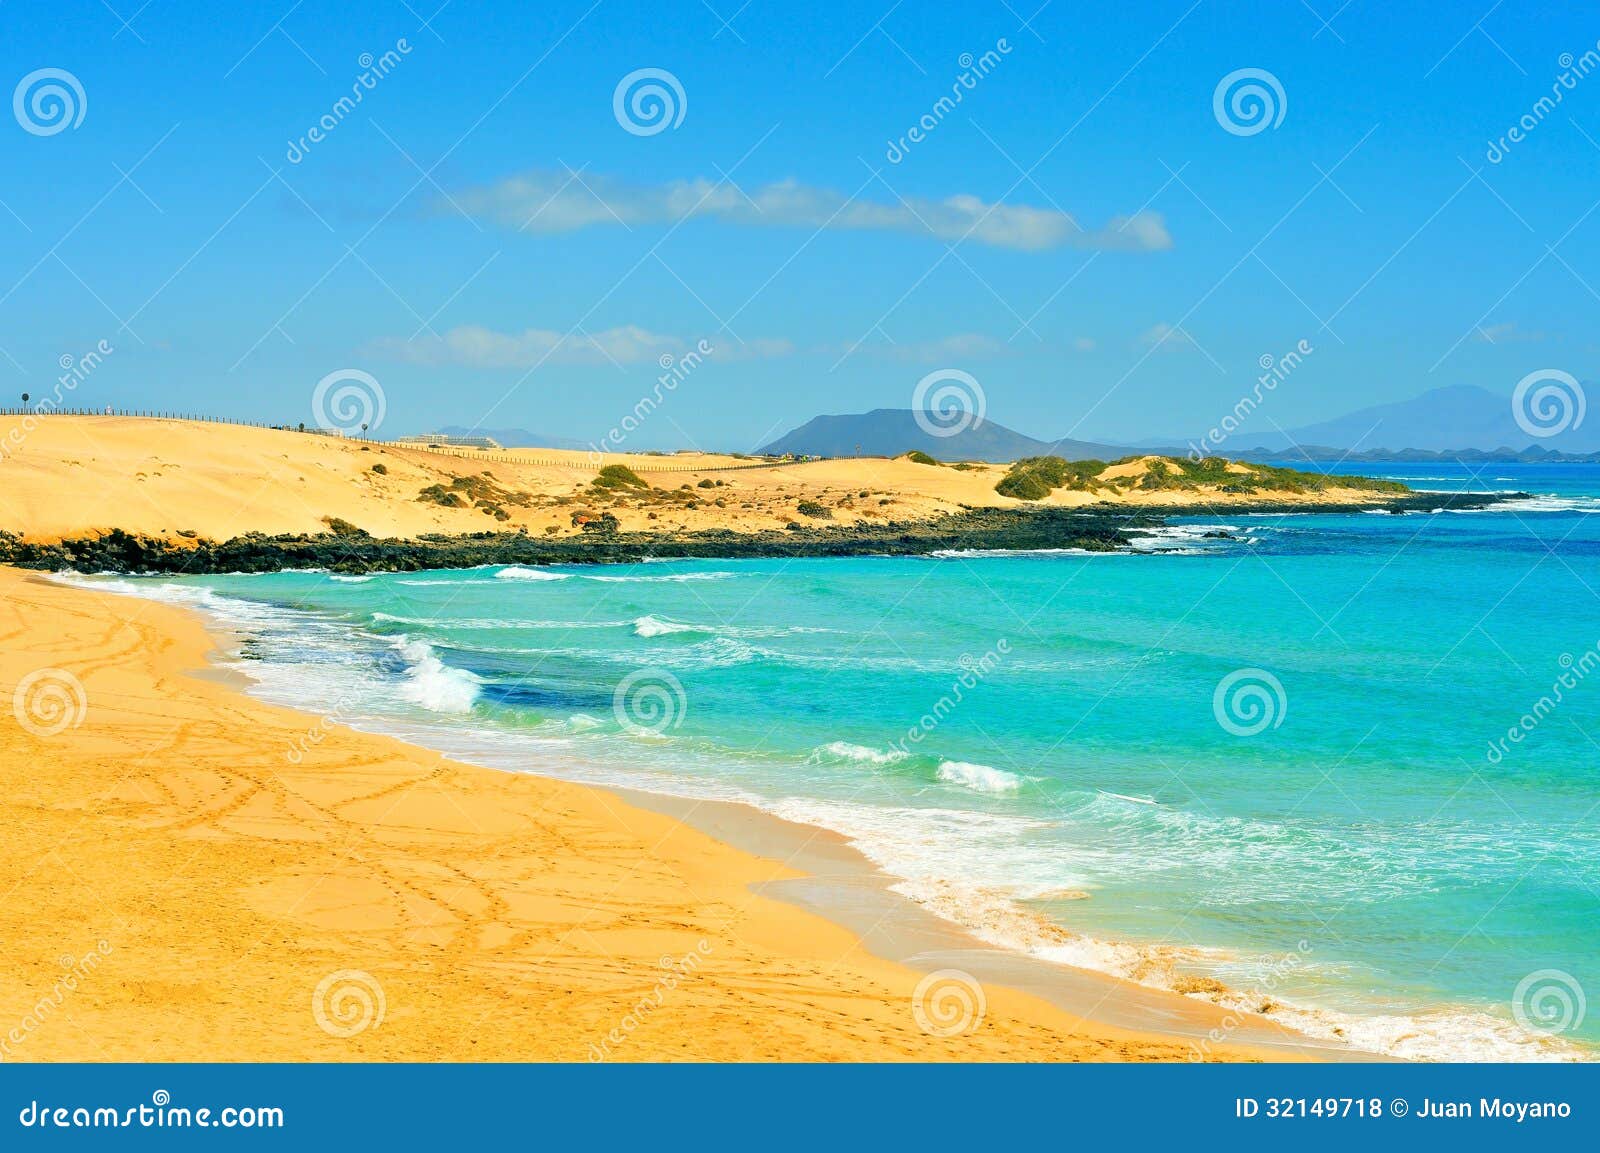 beach in natural park of dunes of corralejo in fuerteventura